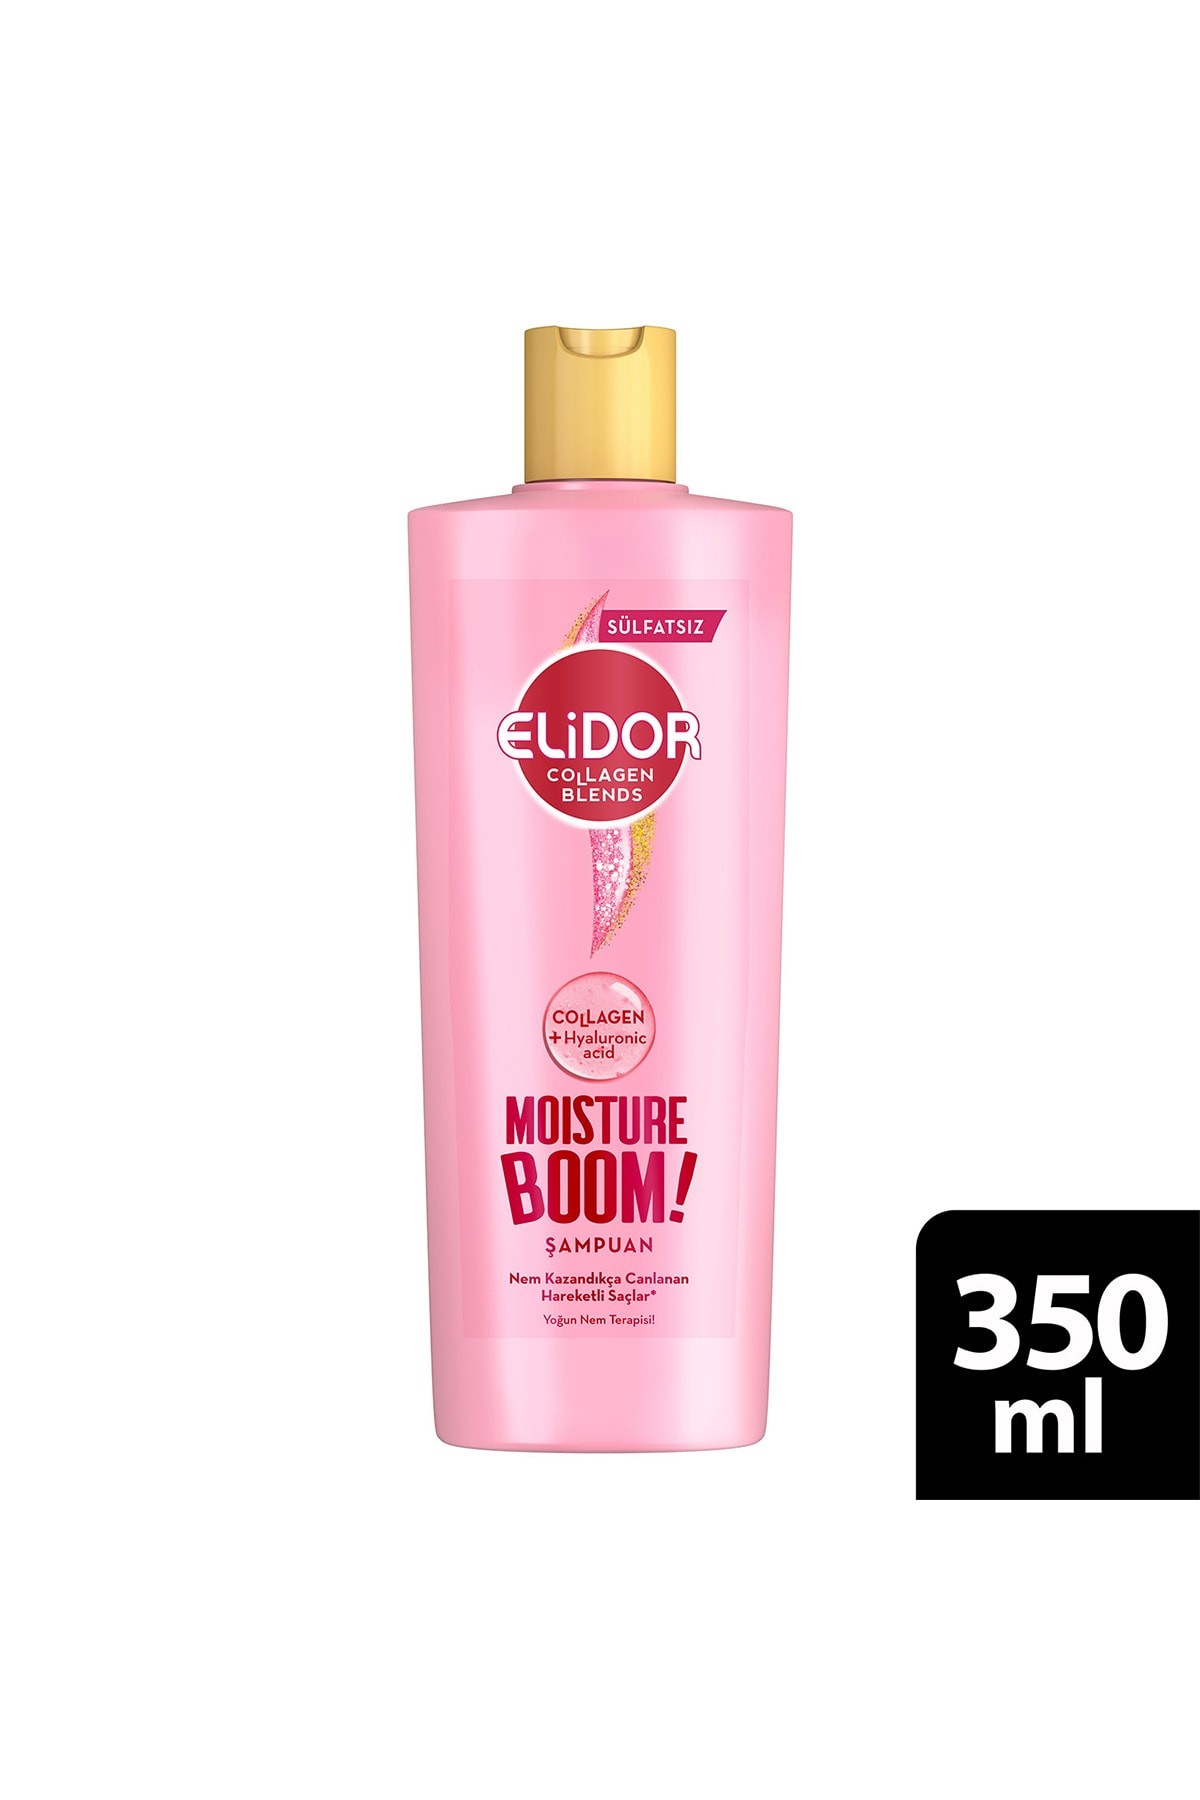 Elidor Collagen Blends Moısture Boom Yoğun Nem Terapisi Şampuan 350 ml